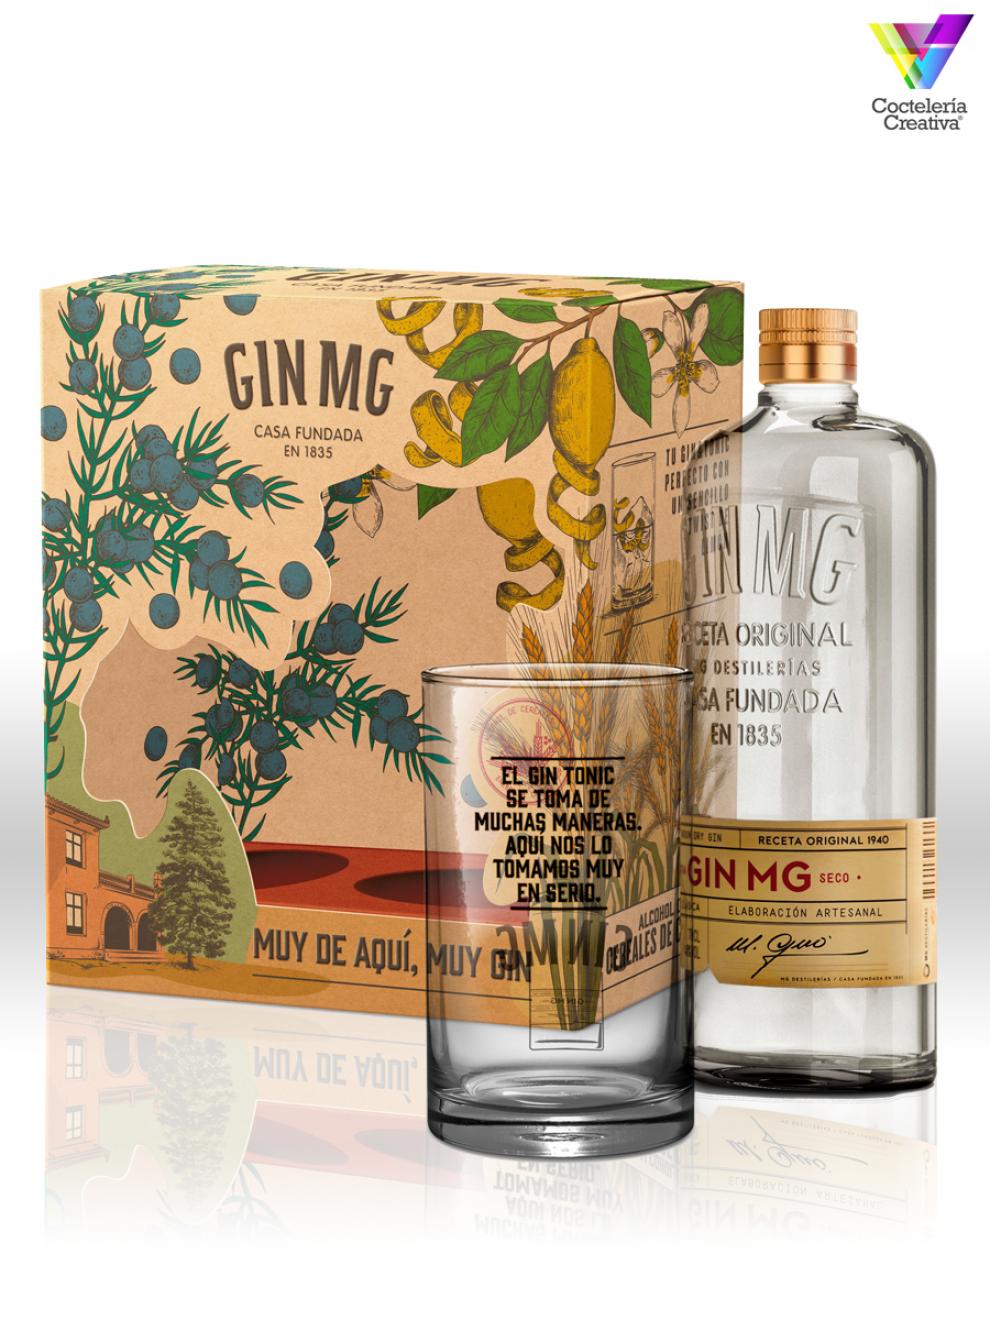 imagen pack navidad botella Gin MG y vaso gratis